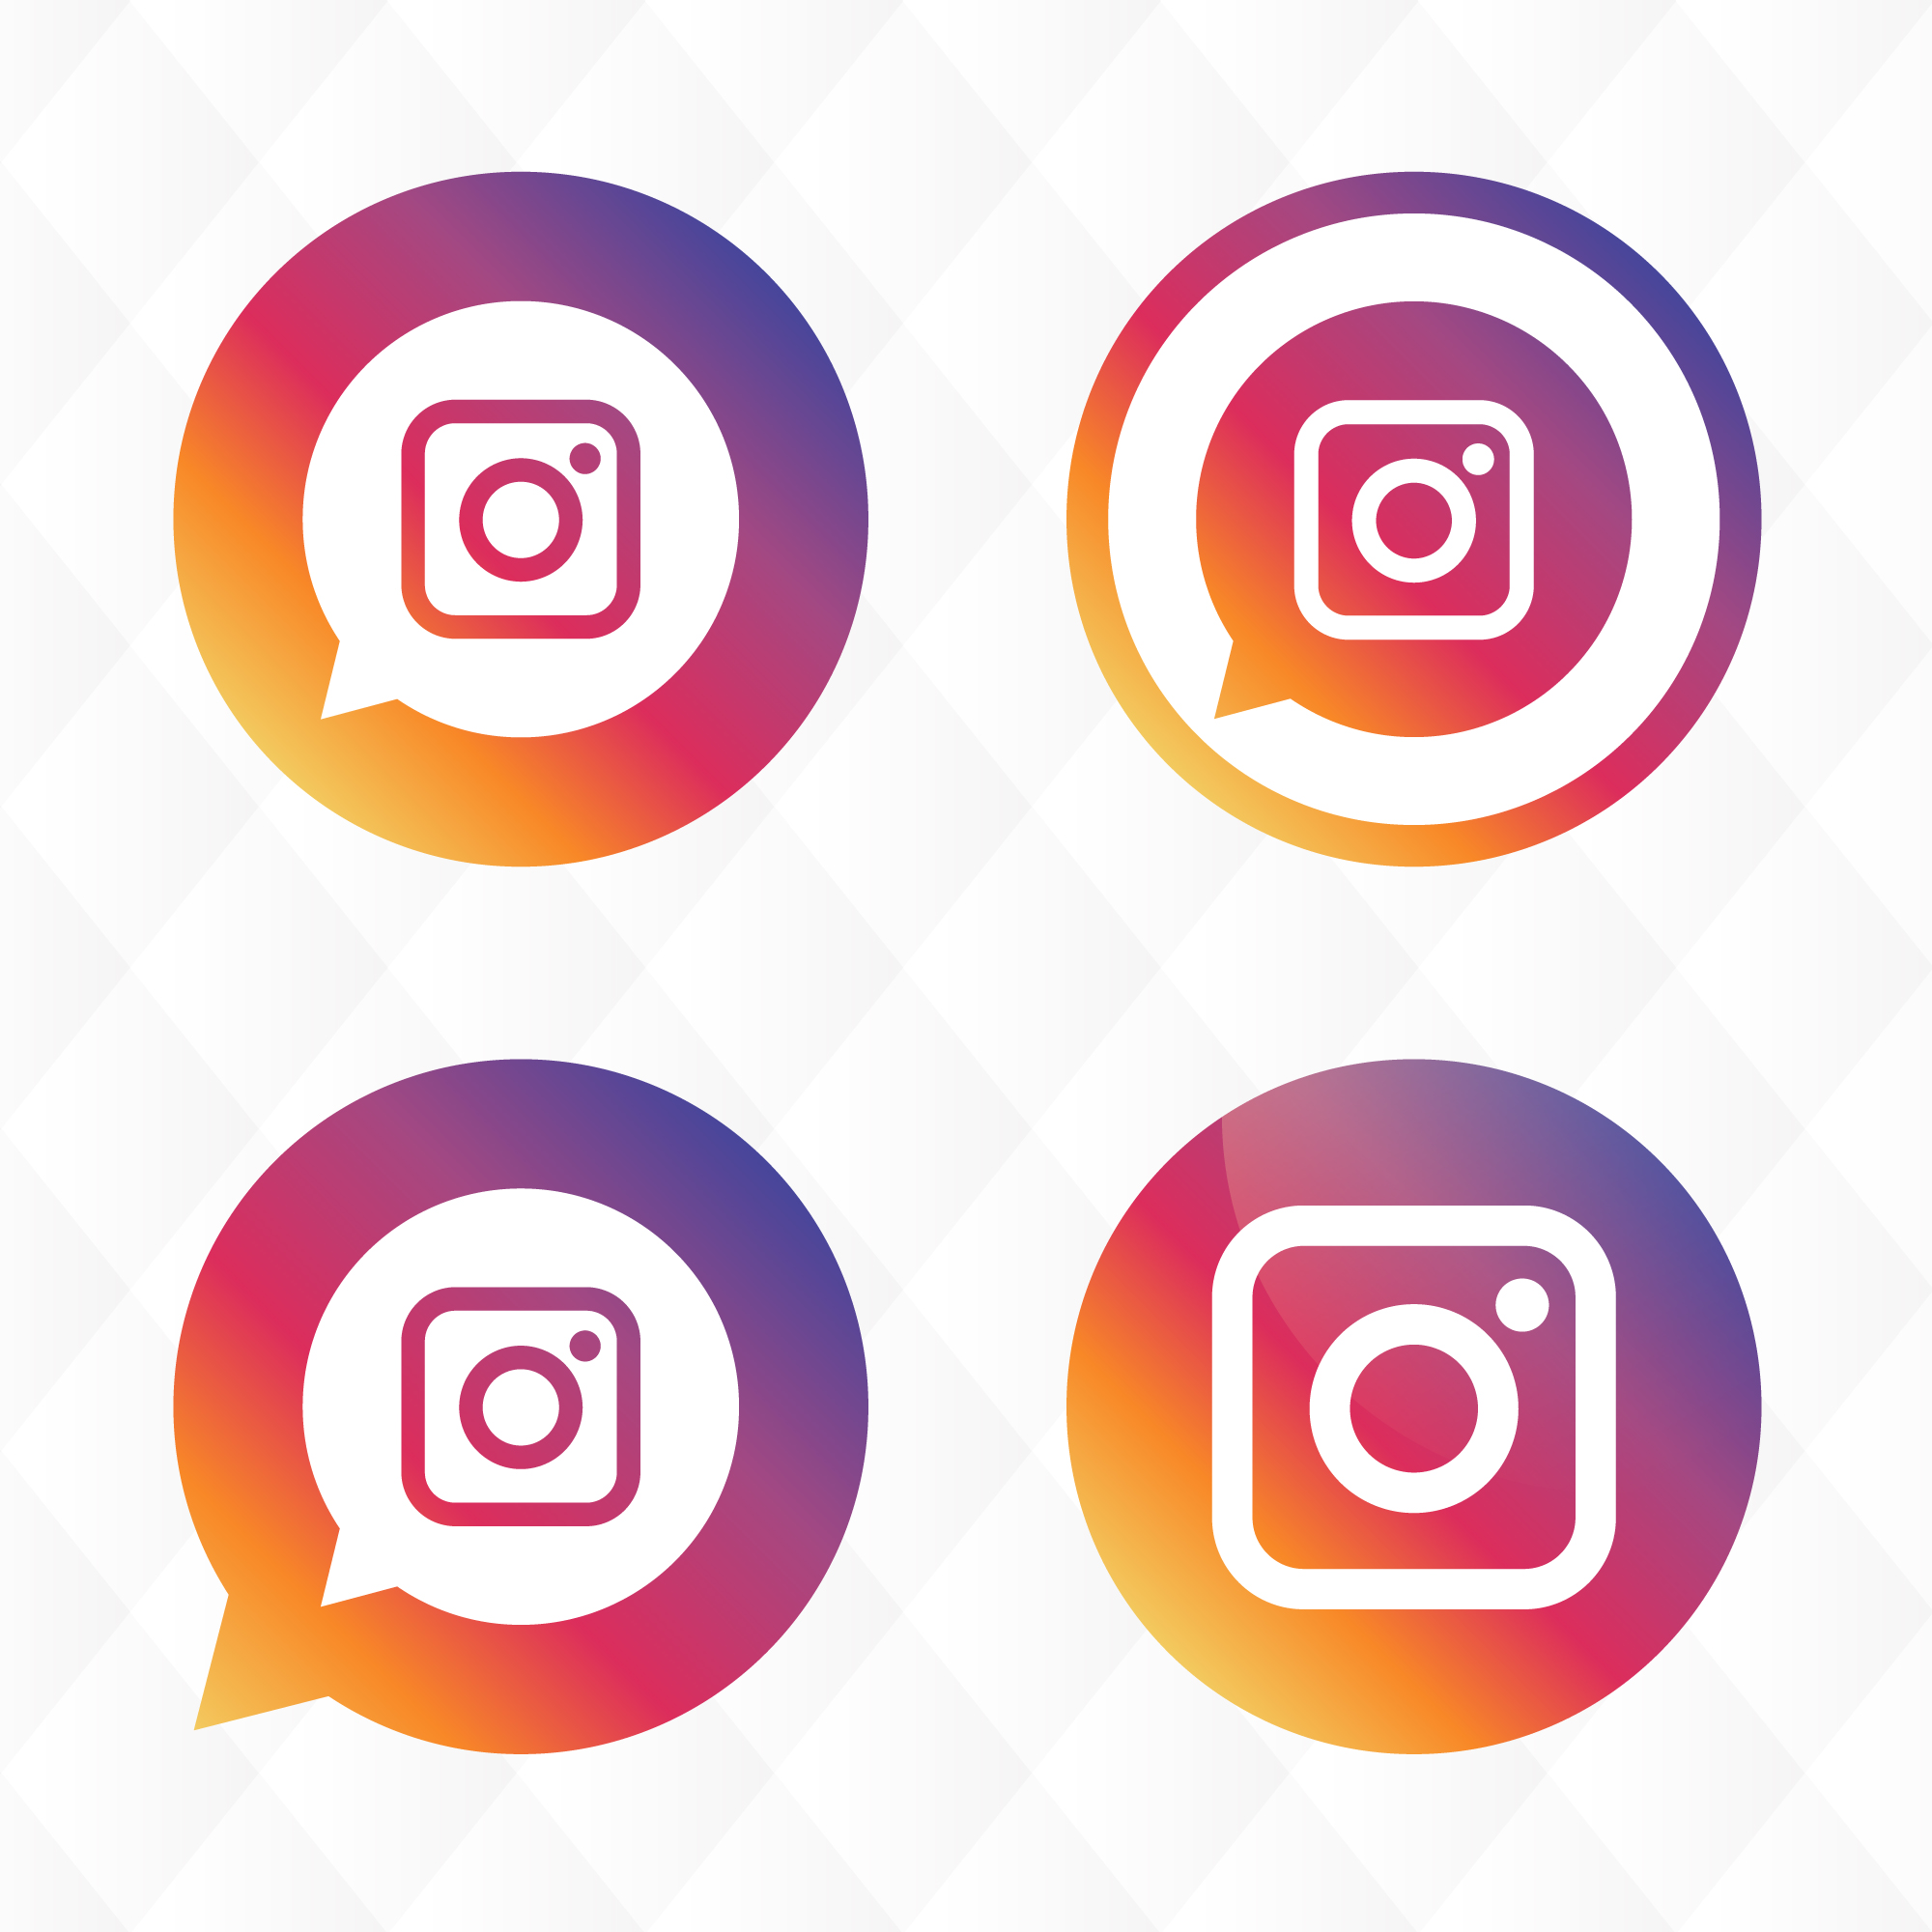 Icones Do Instagram Vetor Nesta p gina o pngtree oferece imagens gr tis ...